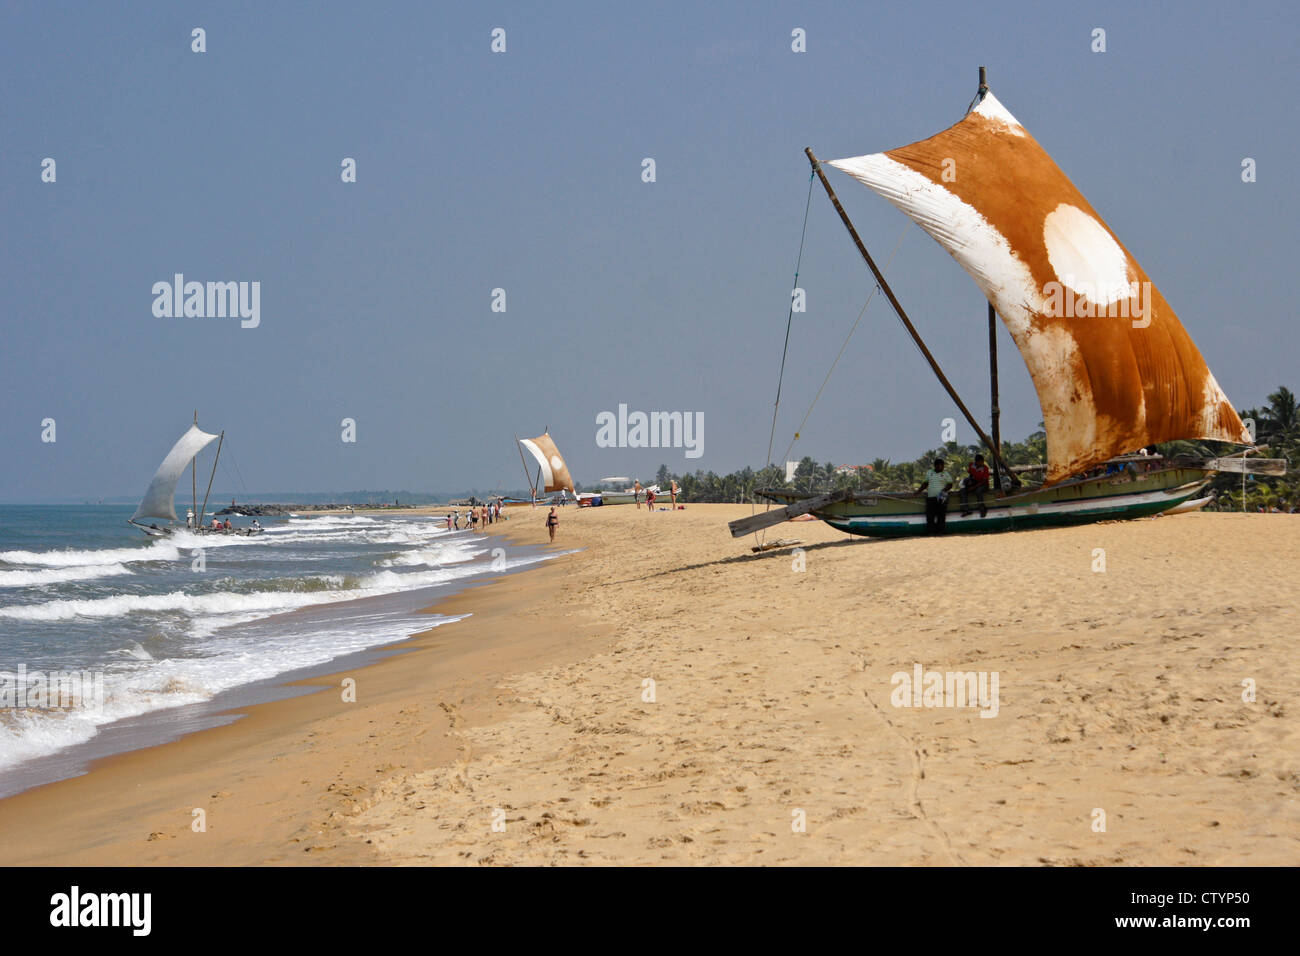 Outrigger fishing boats (oru) on beach, Negombo, Sri Lanka Stock Photo